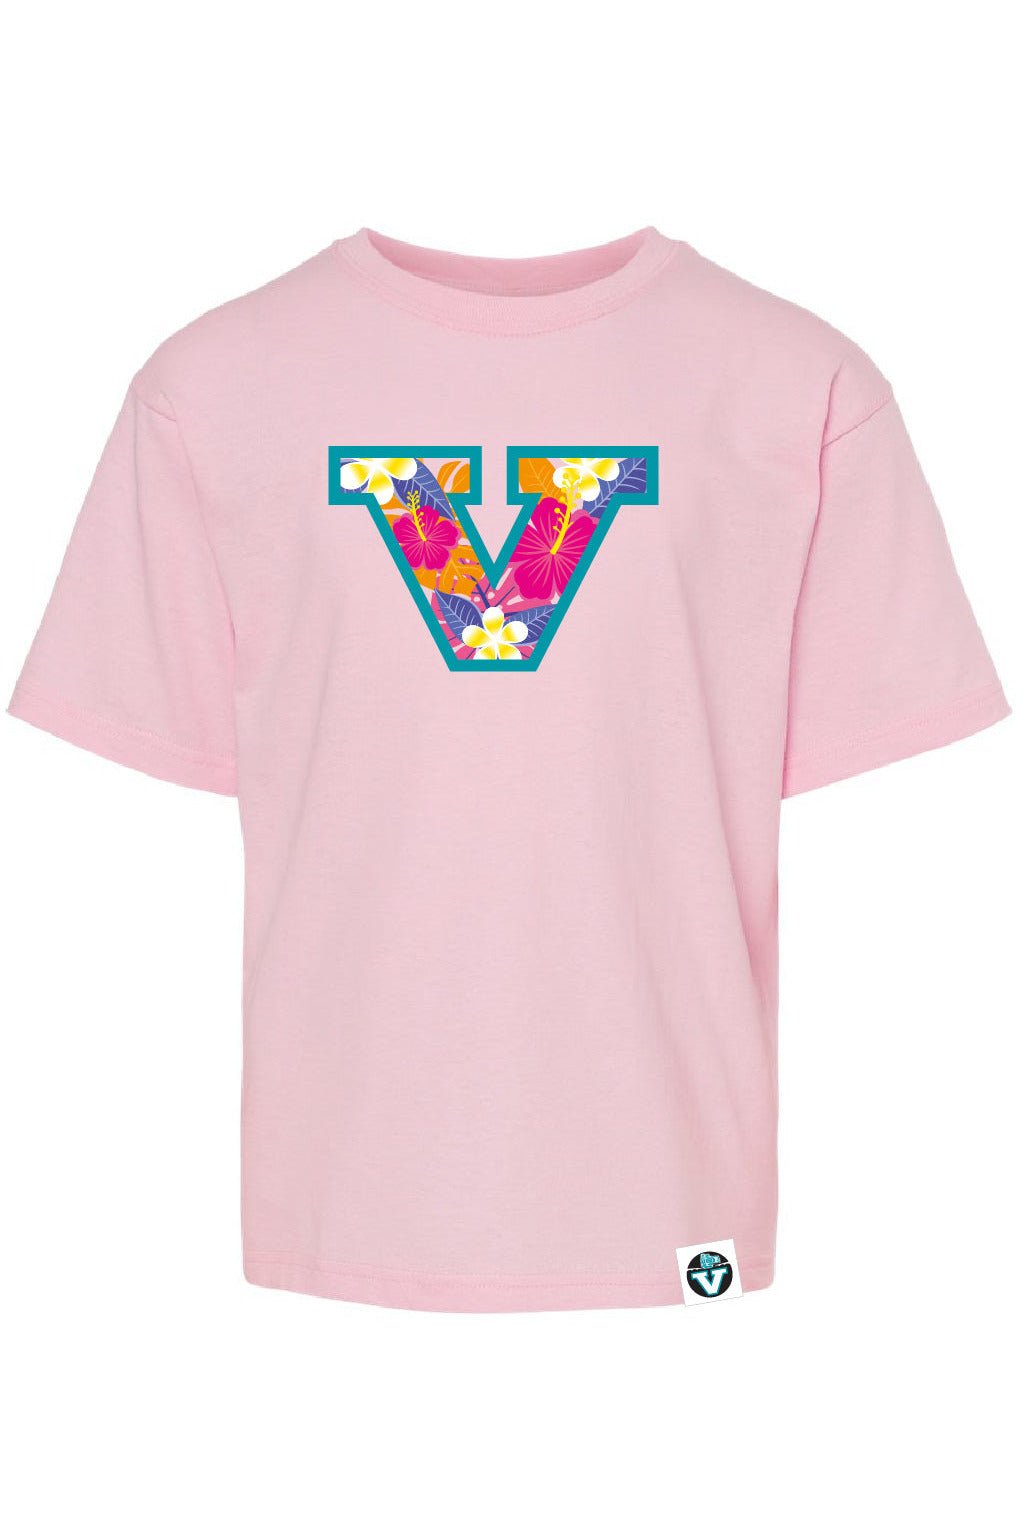 Vancouver Lacrosse Floral V Logo Short Sleeve Tee (Youth) - Oddball Workshop